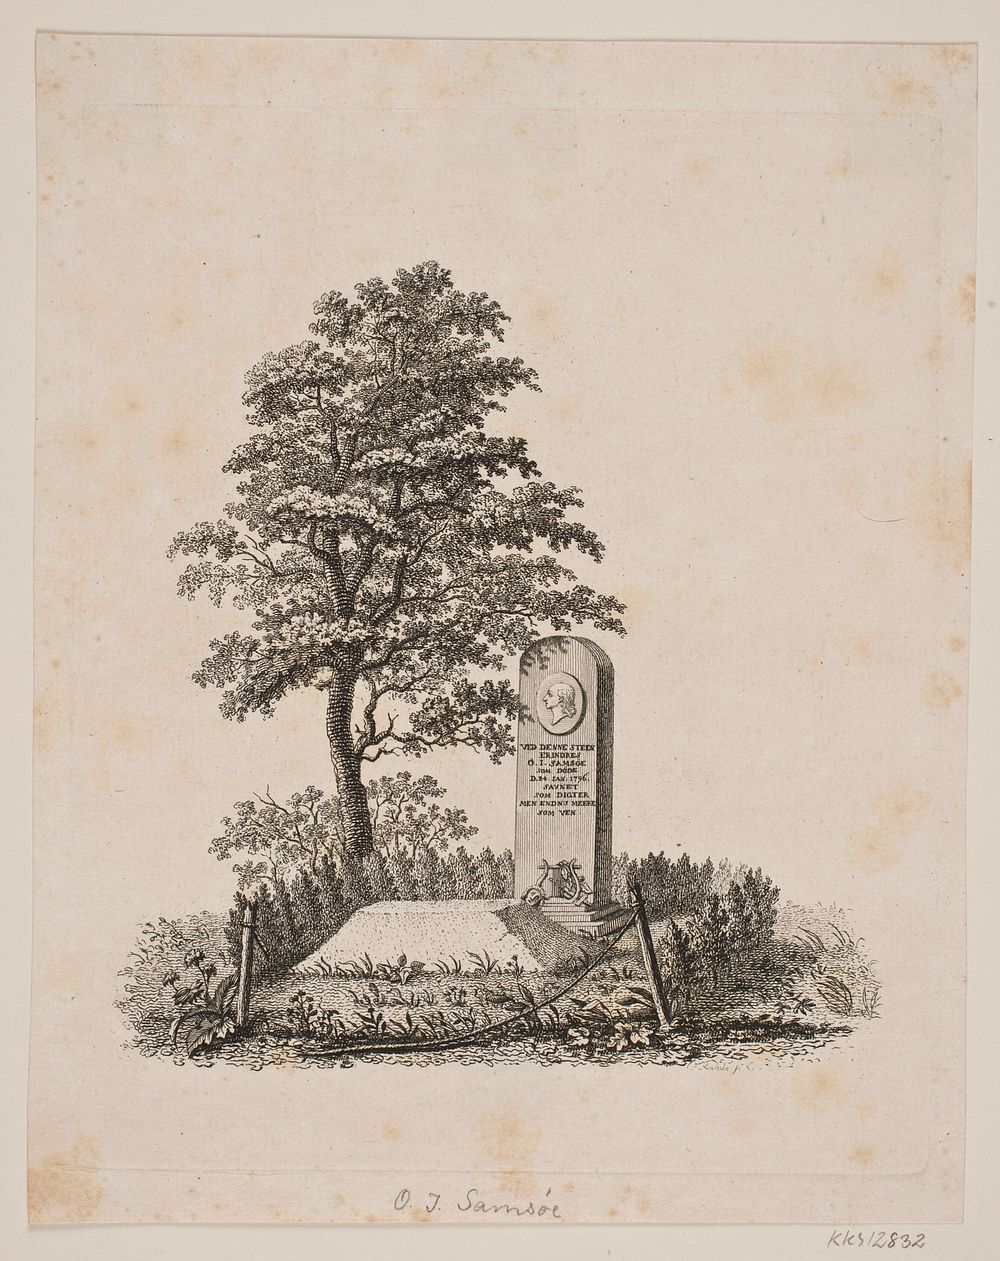 Ole Johan Samsøe's grave memorial by Gerhard Ludvig Lahde